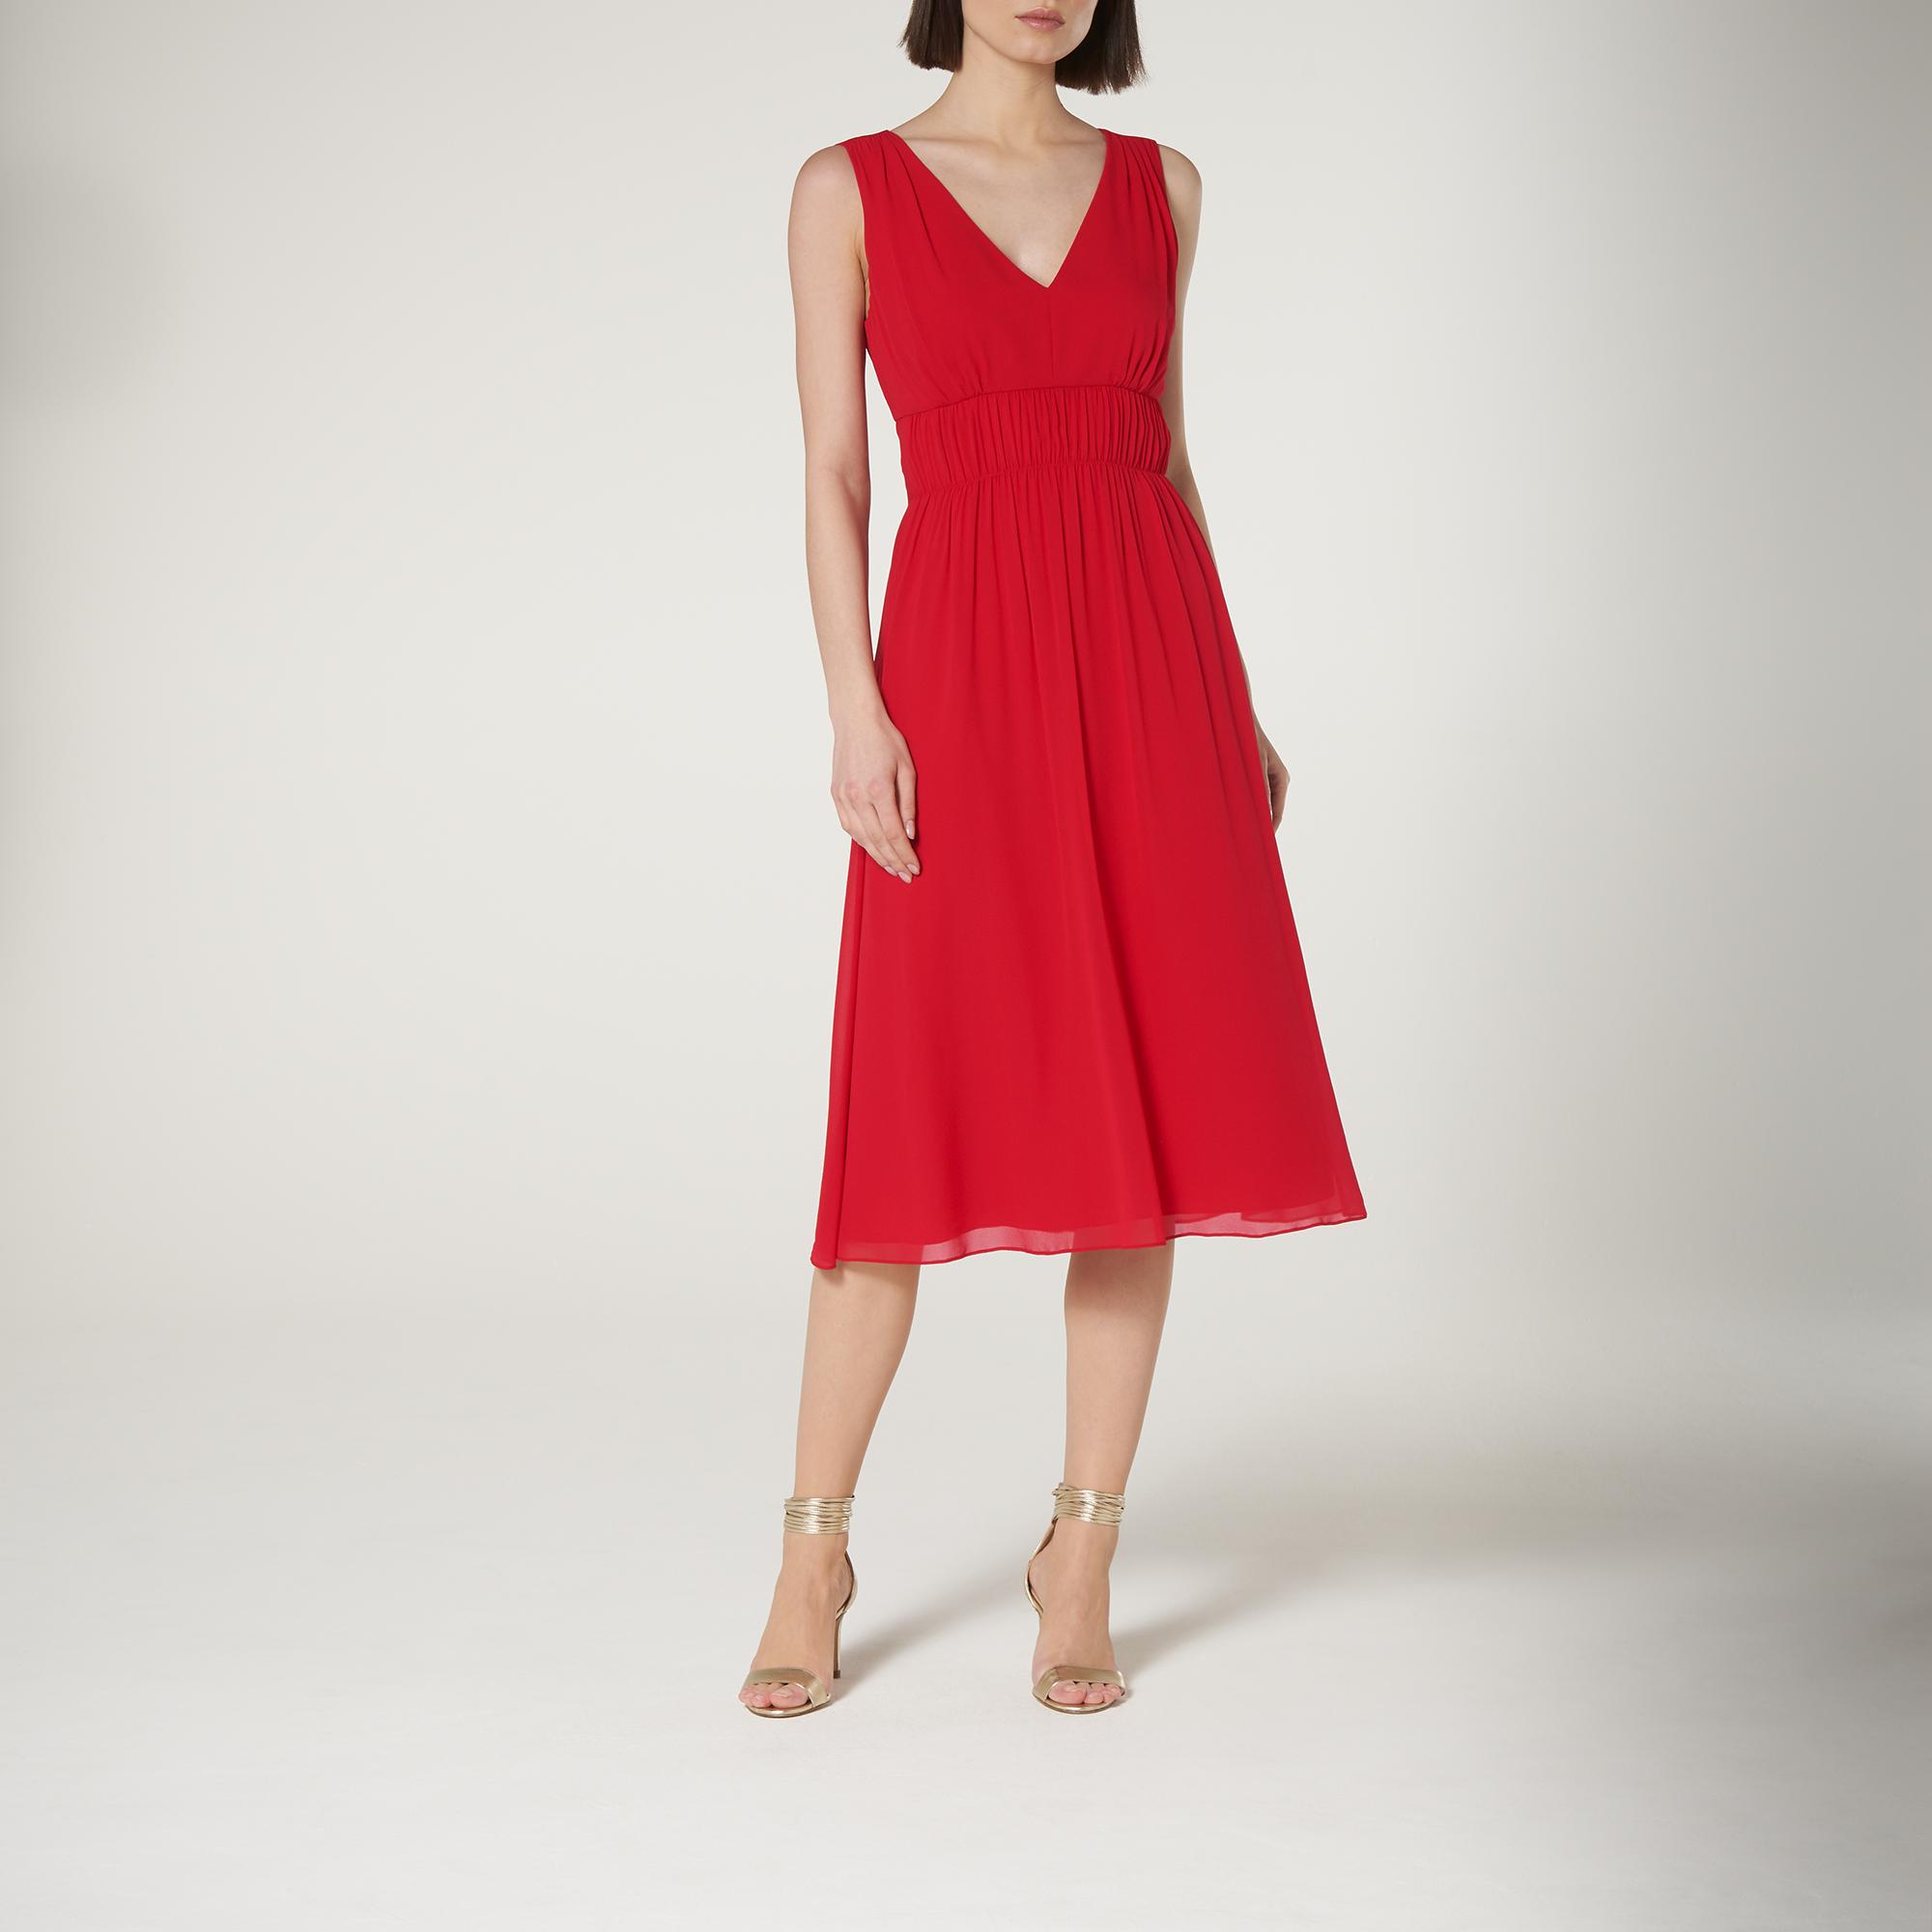 Lk Bennett Red Silk Dress Flash Sales ...